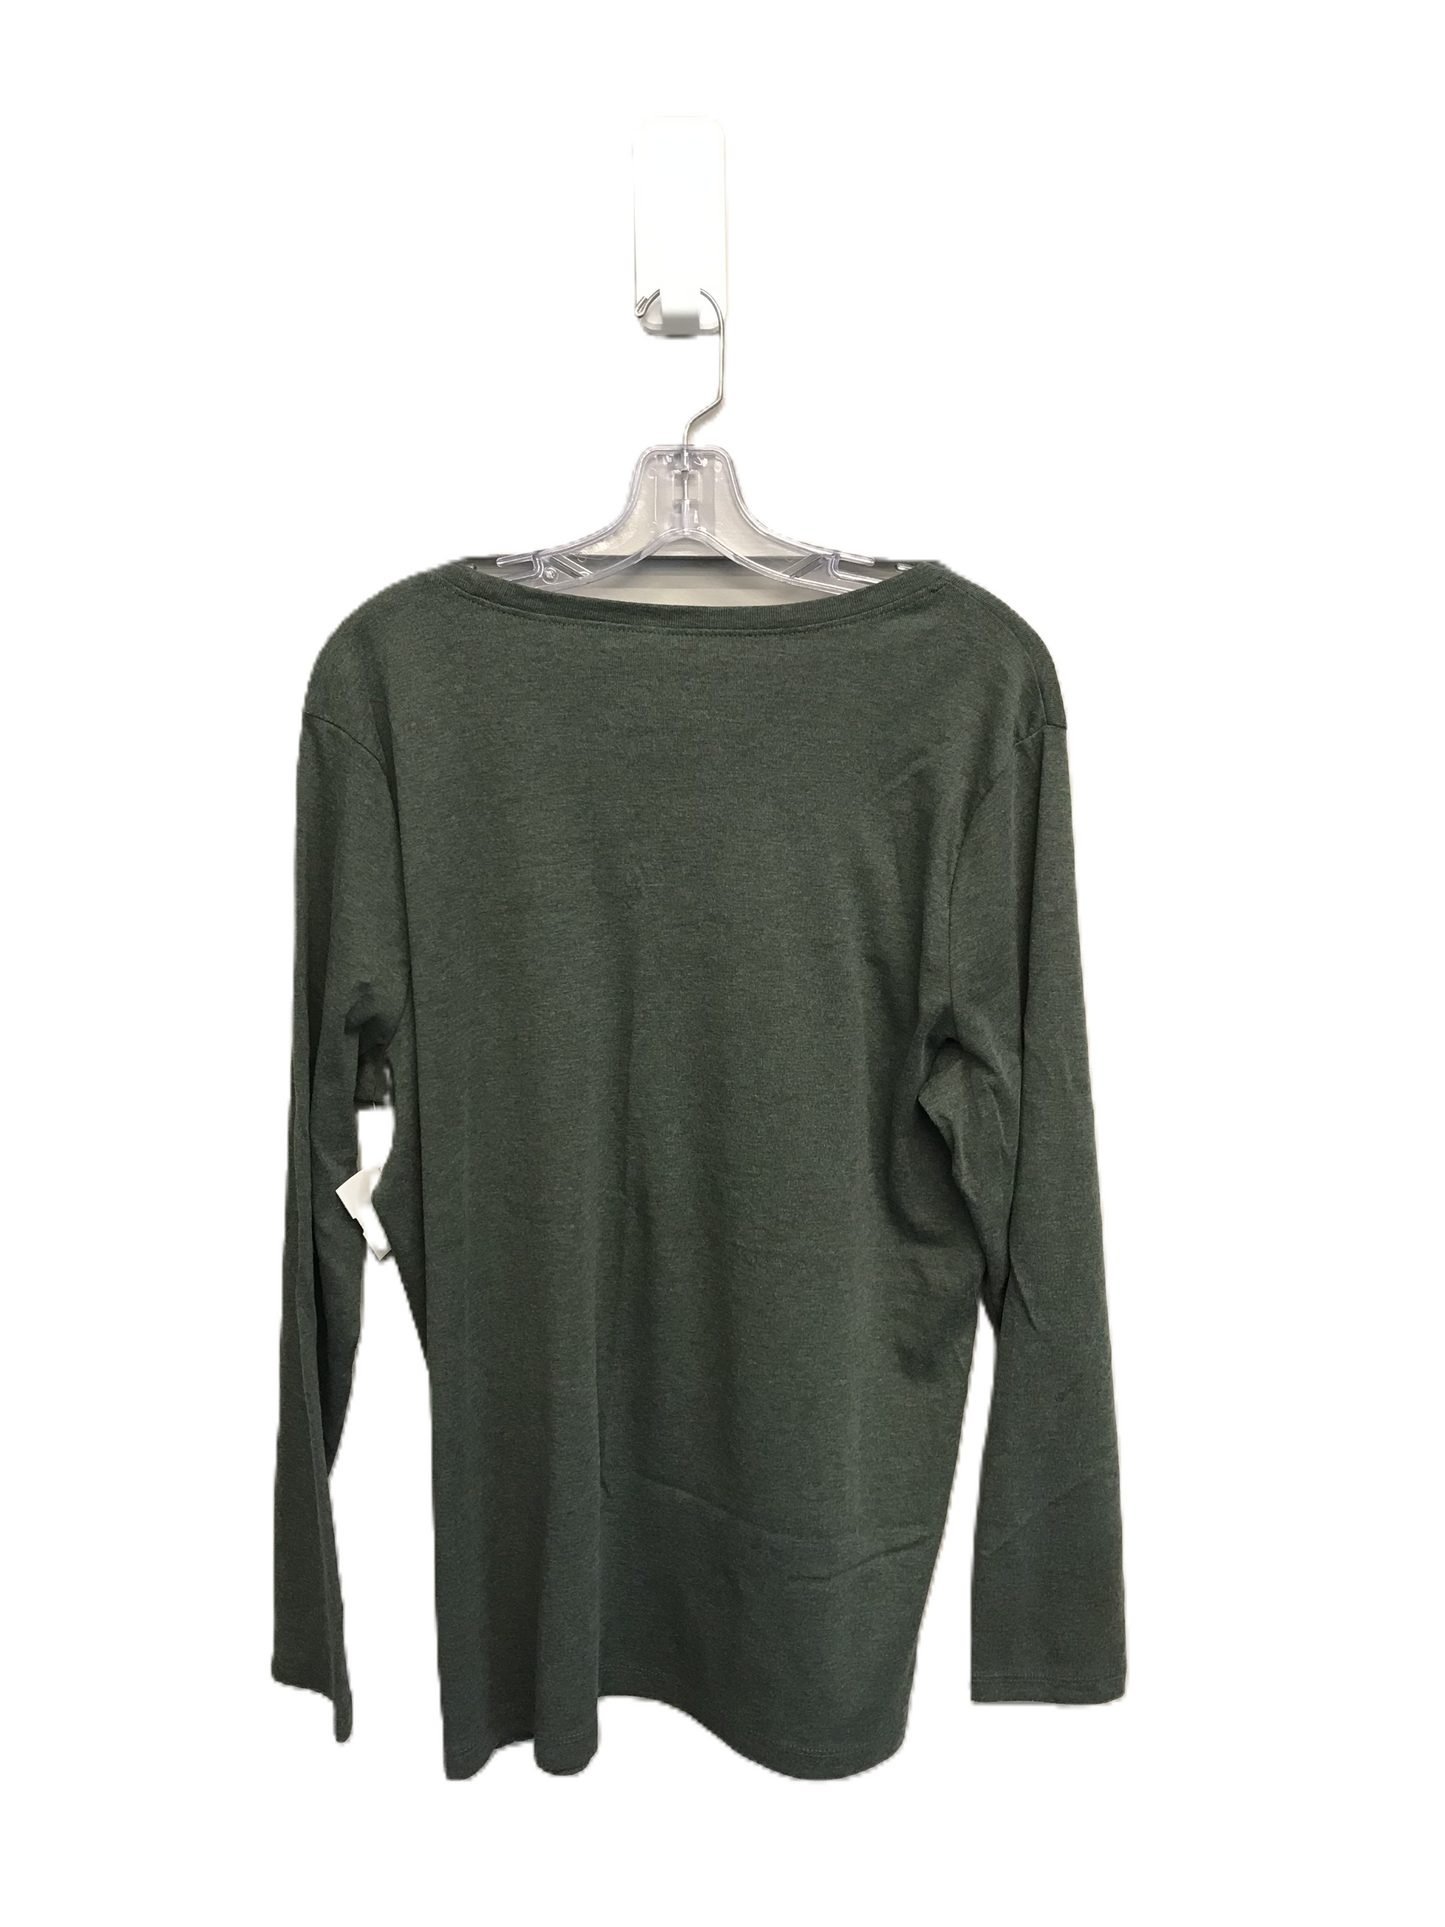 Green Top Short Sleeve Basic By Eddie Bauer, Size: 2x